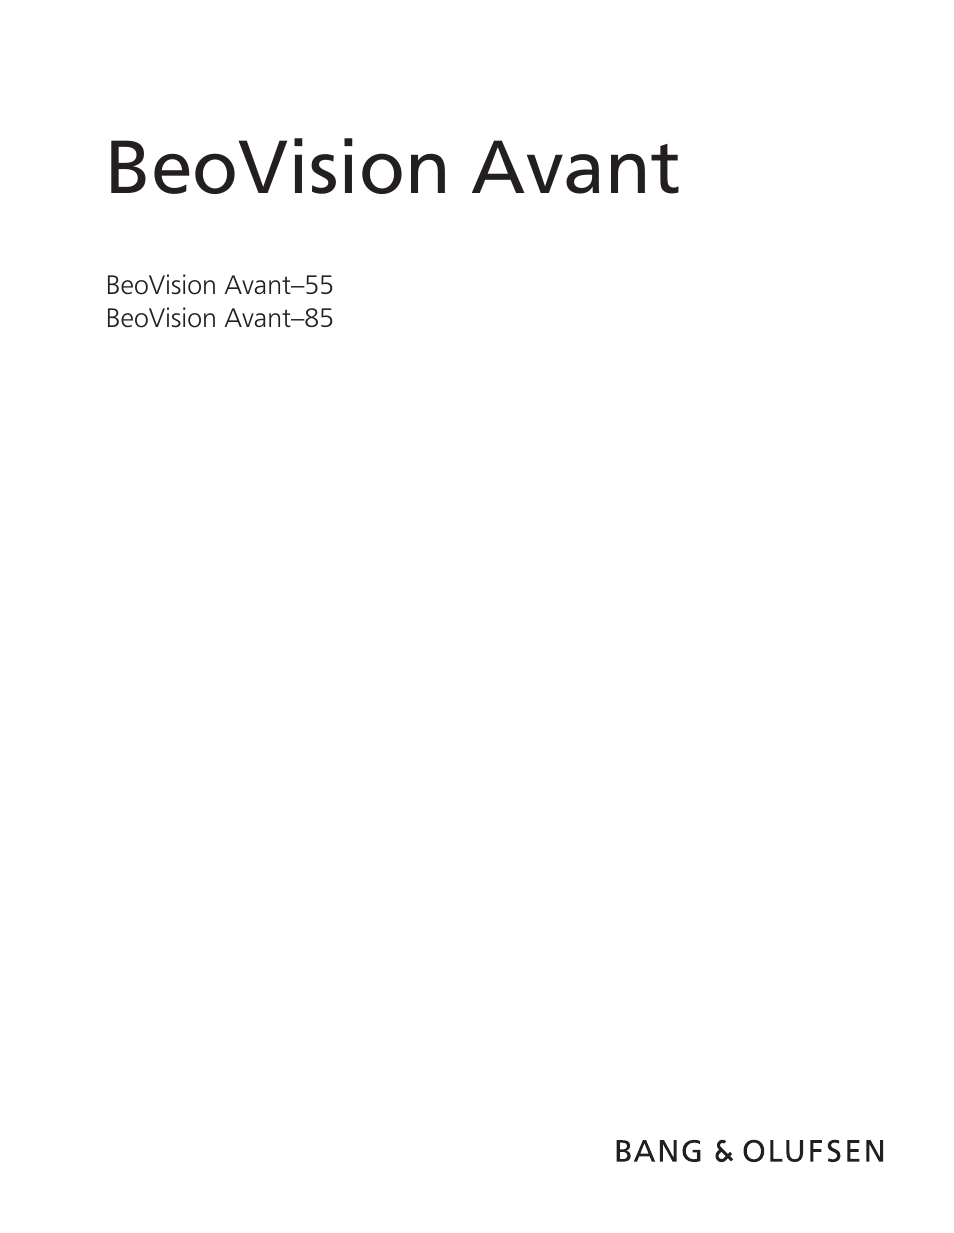 Инструкция по эксплуатации Bang & Olufsen BeoVision Avant - User Guide | 82 страницы